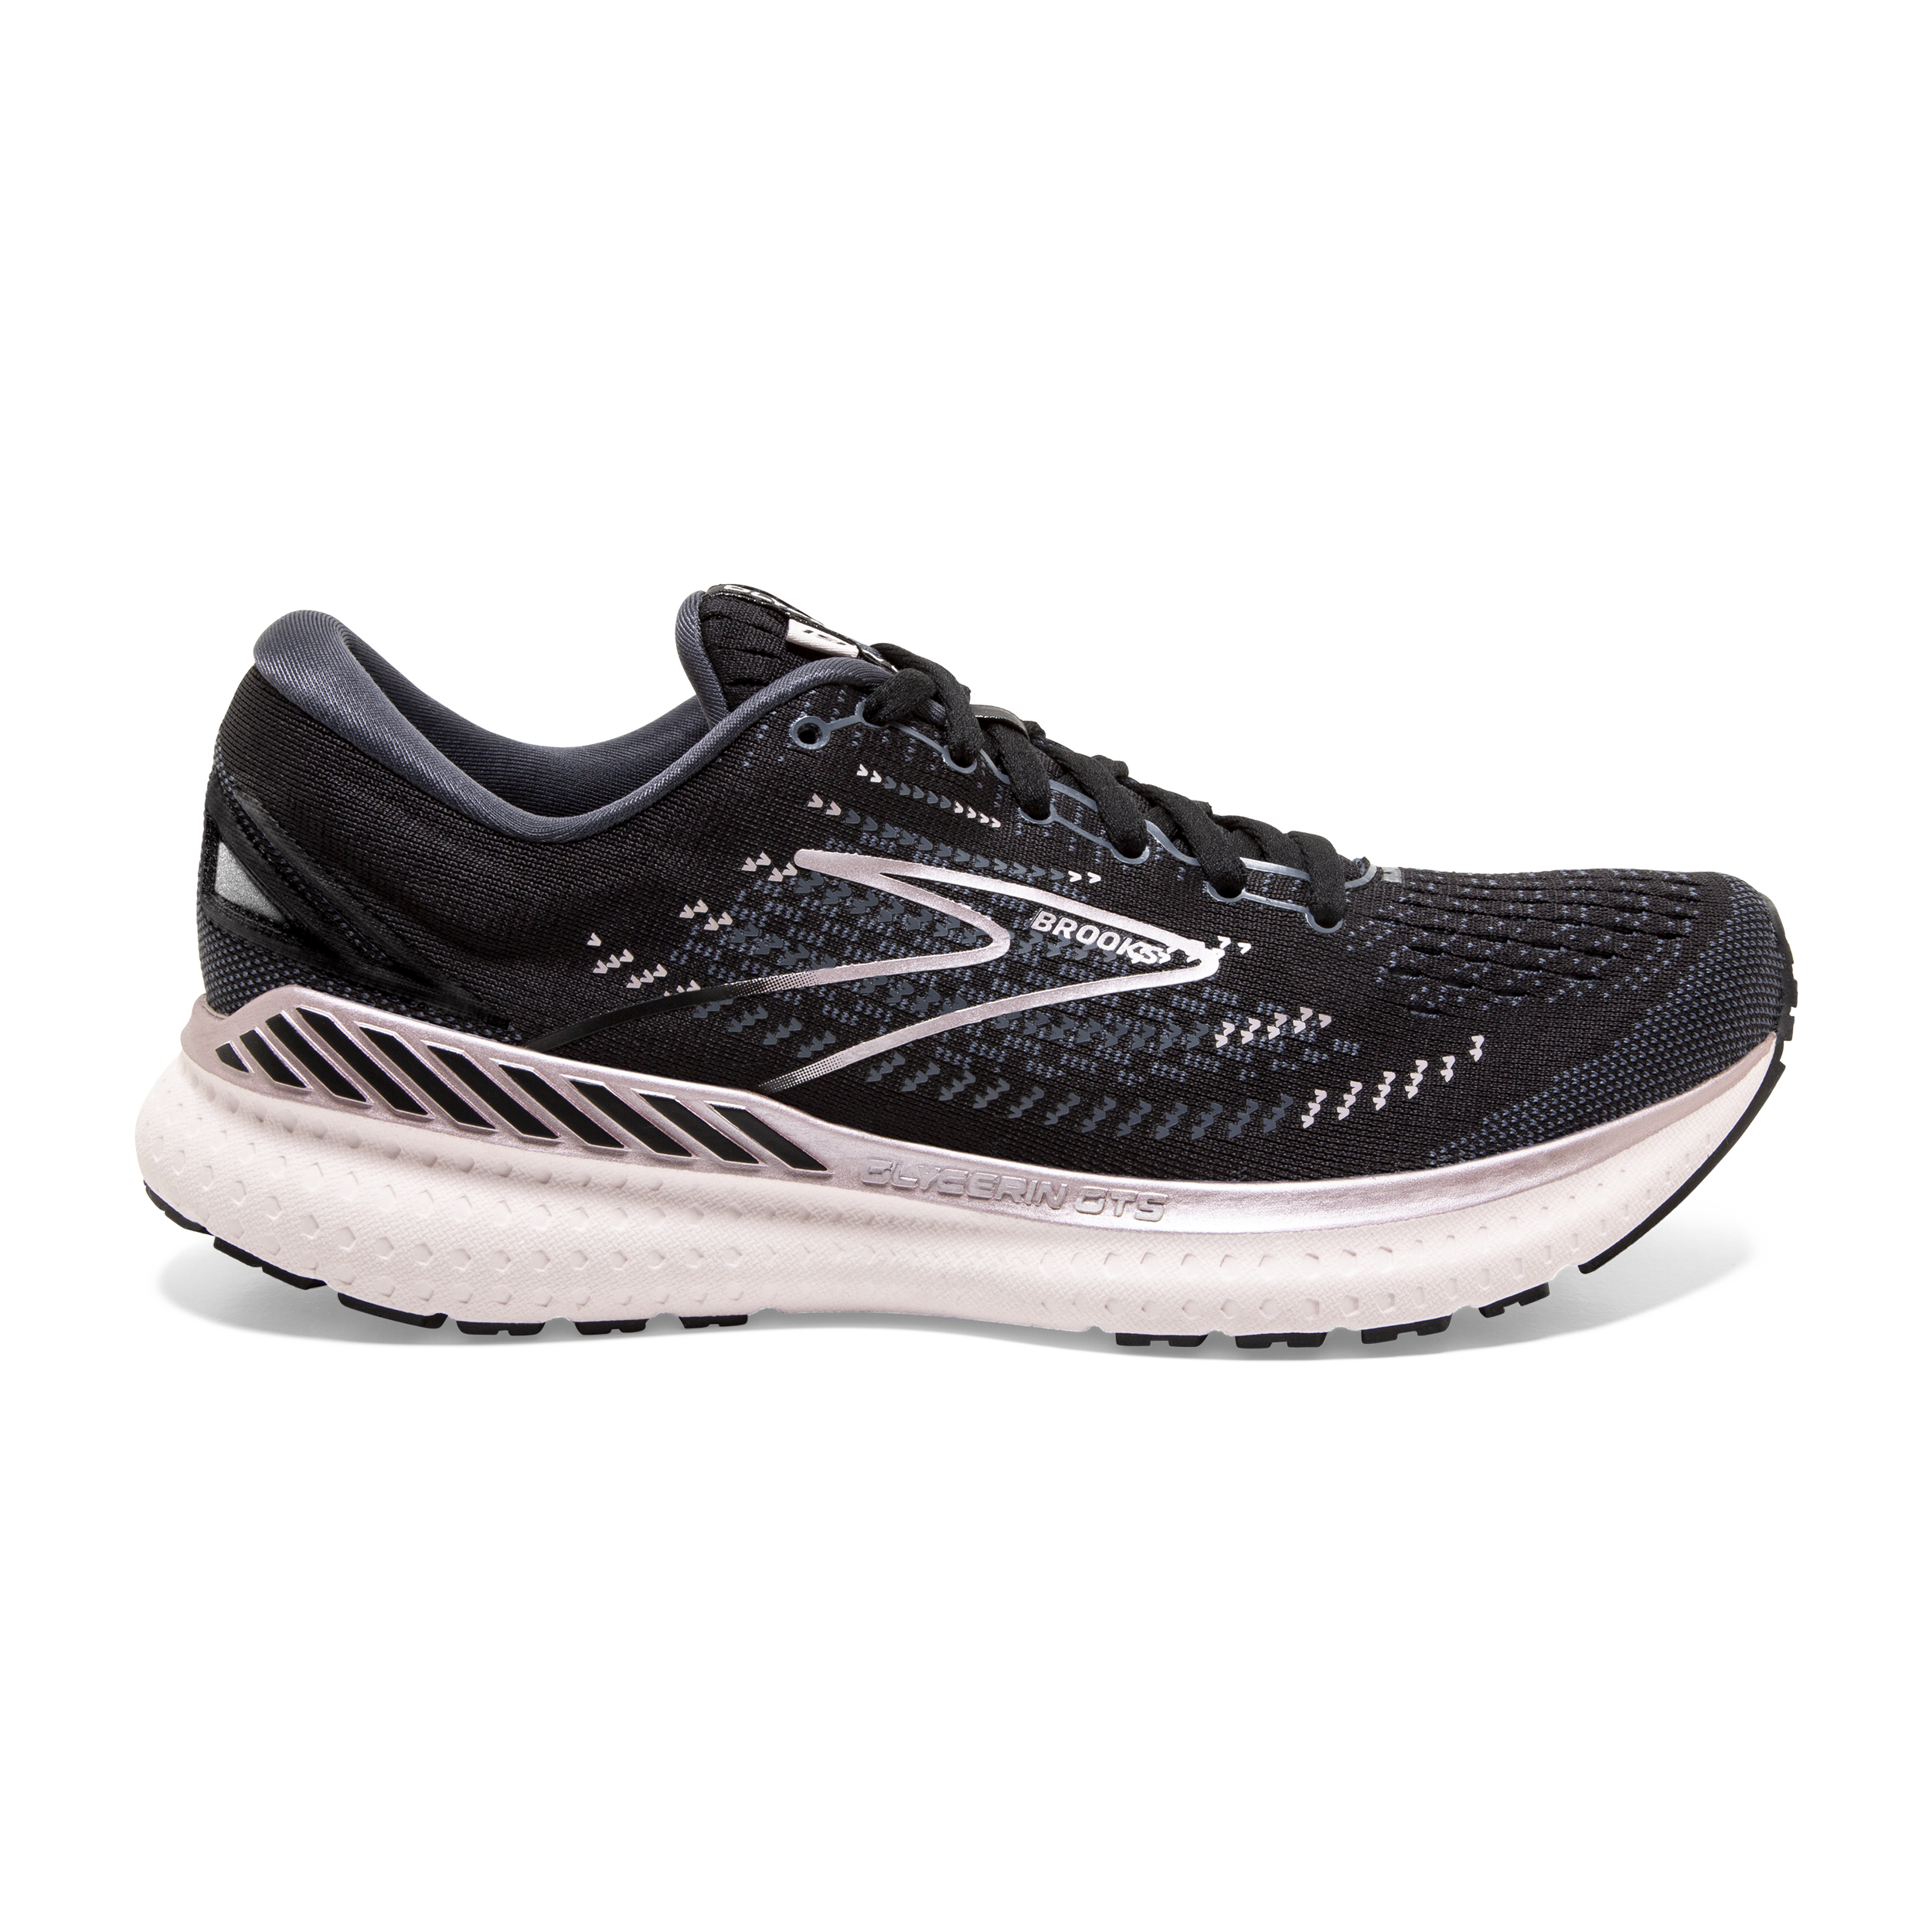 Glycerin GTS 19: Women's Max Cushion Running Shoes | Brooks Running